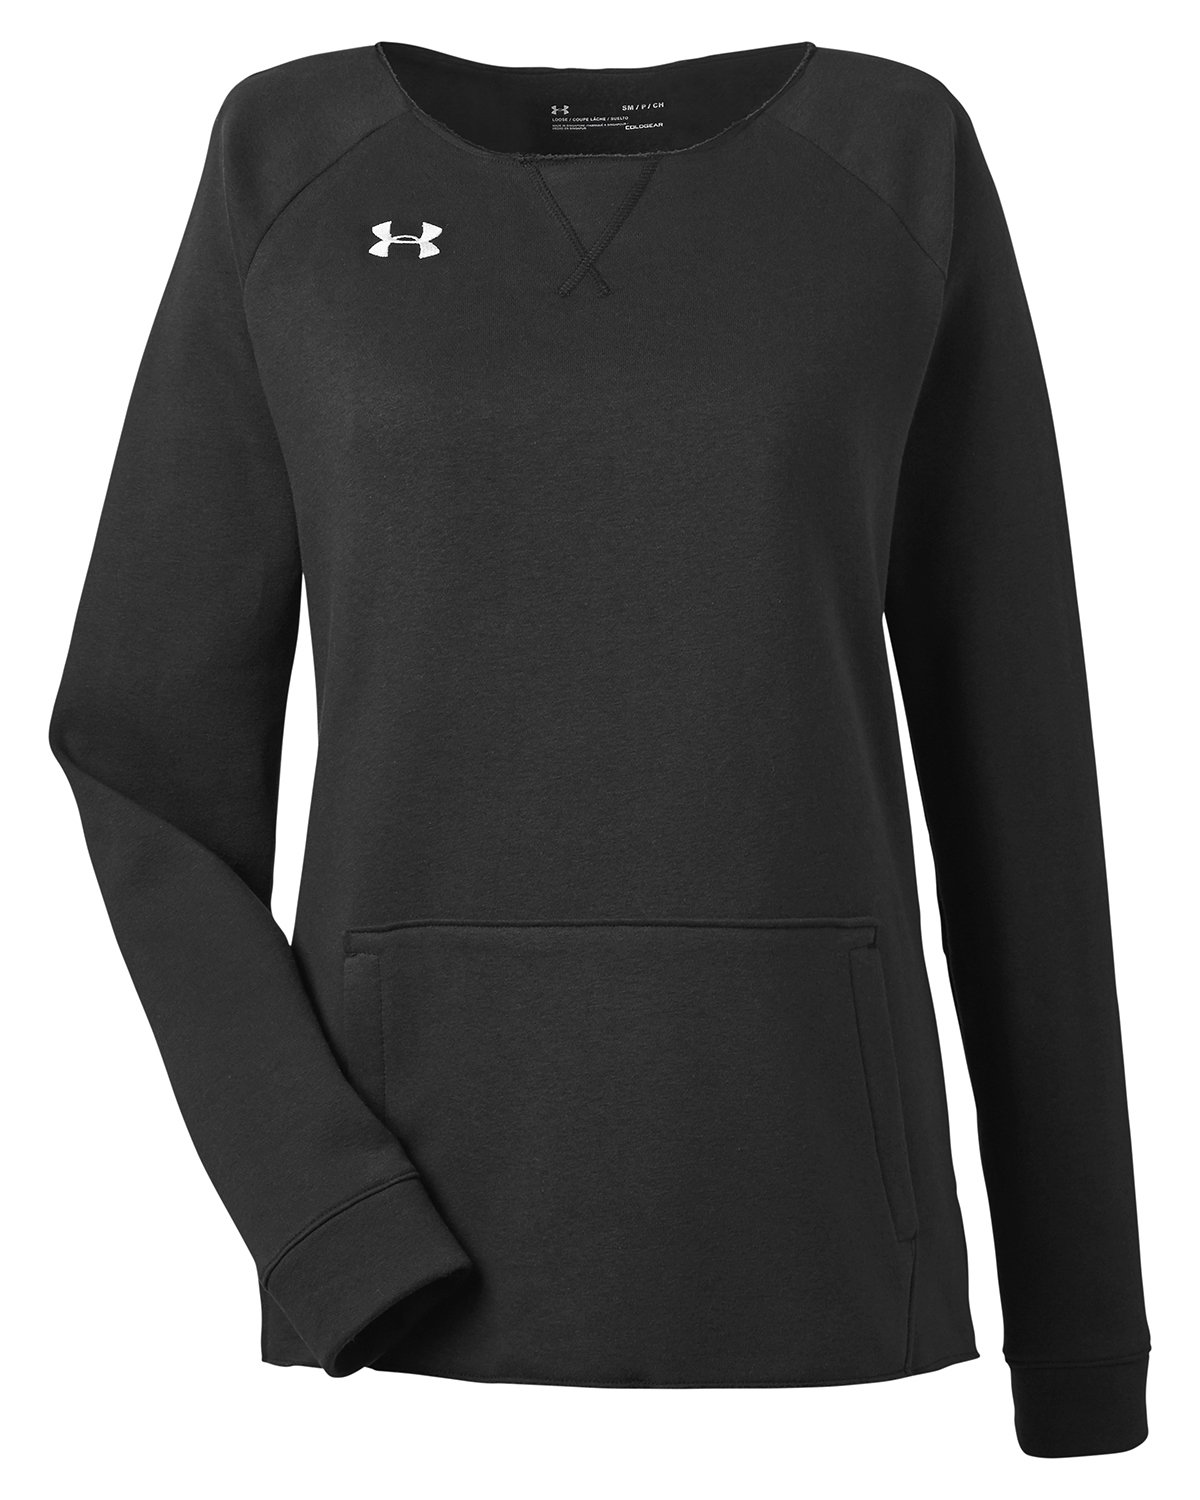 Branded Under Armour Ladies’ Hustle Fleece Crewneck Sweatshirt Black/White